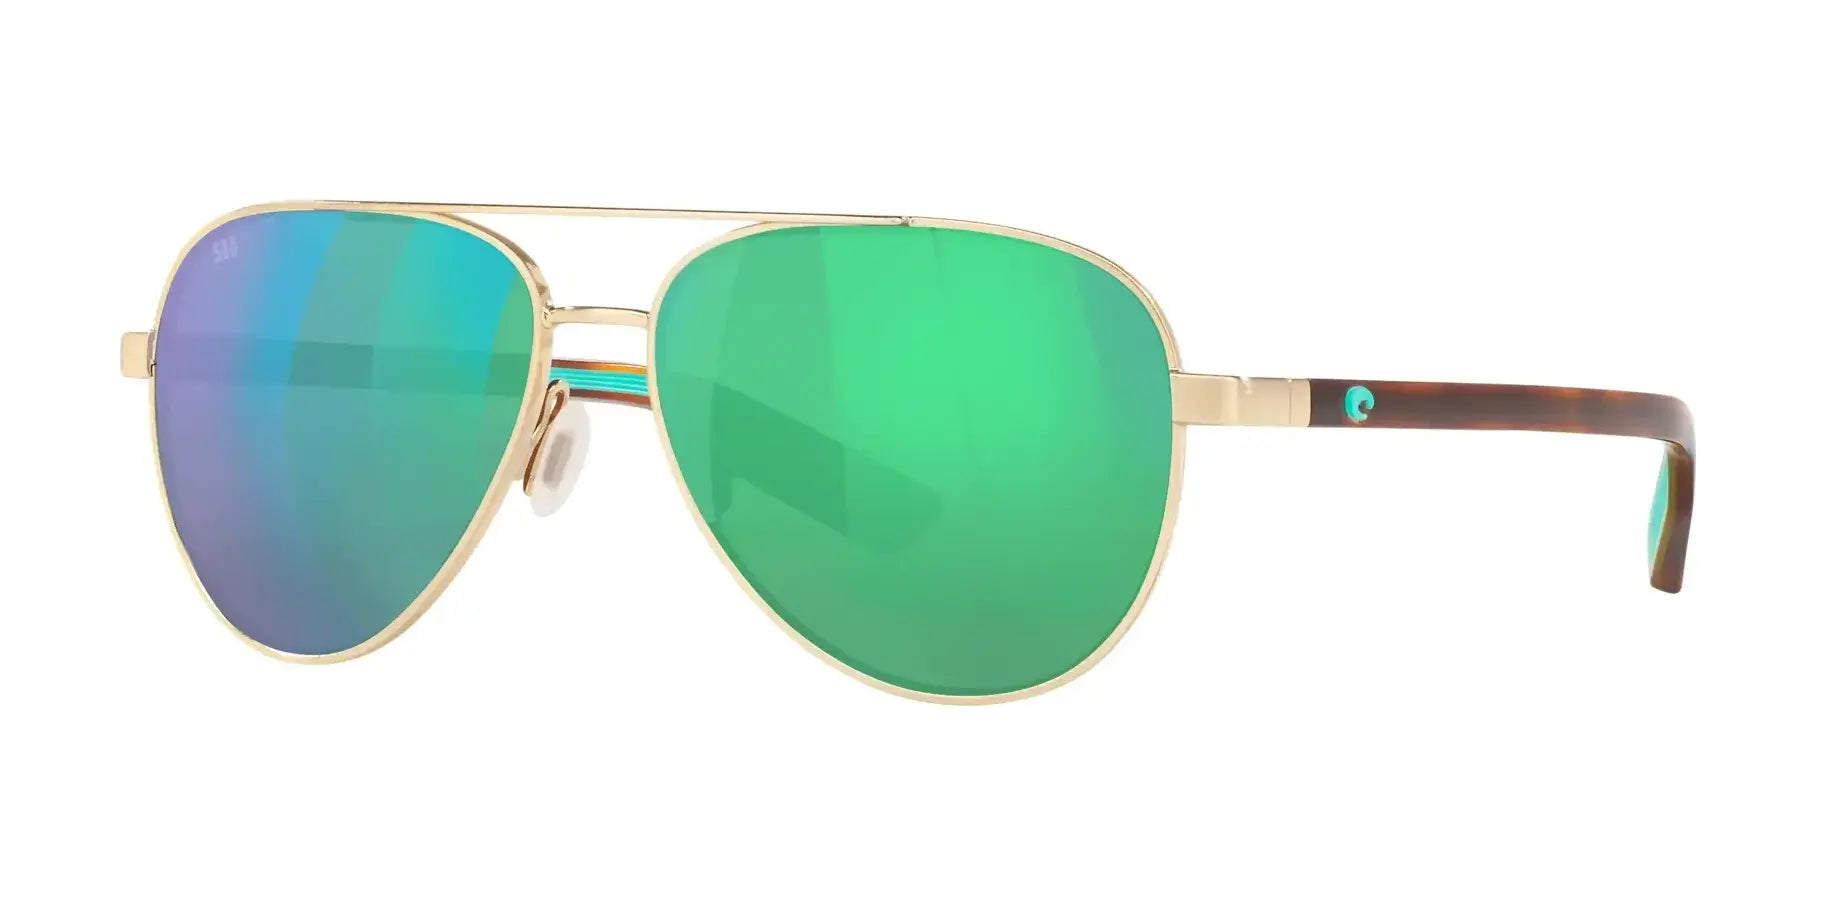 Costa PELI 6S4002 Sunglasses Brushed Gold / Green Mirror